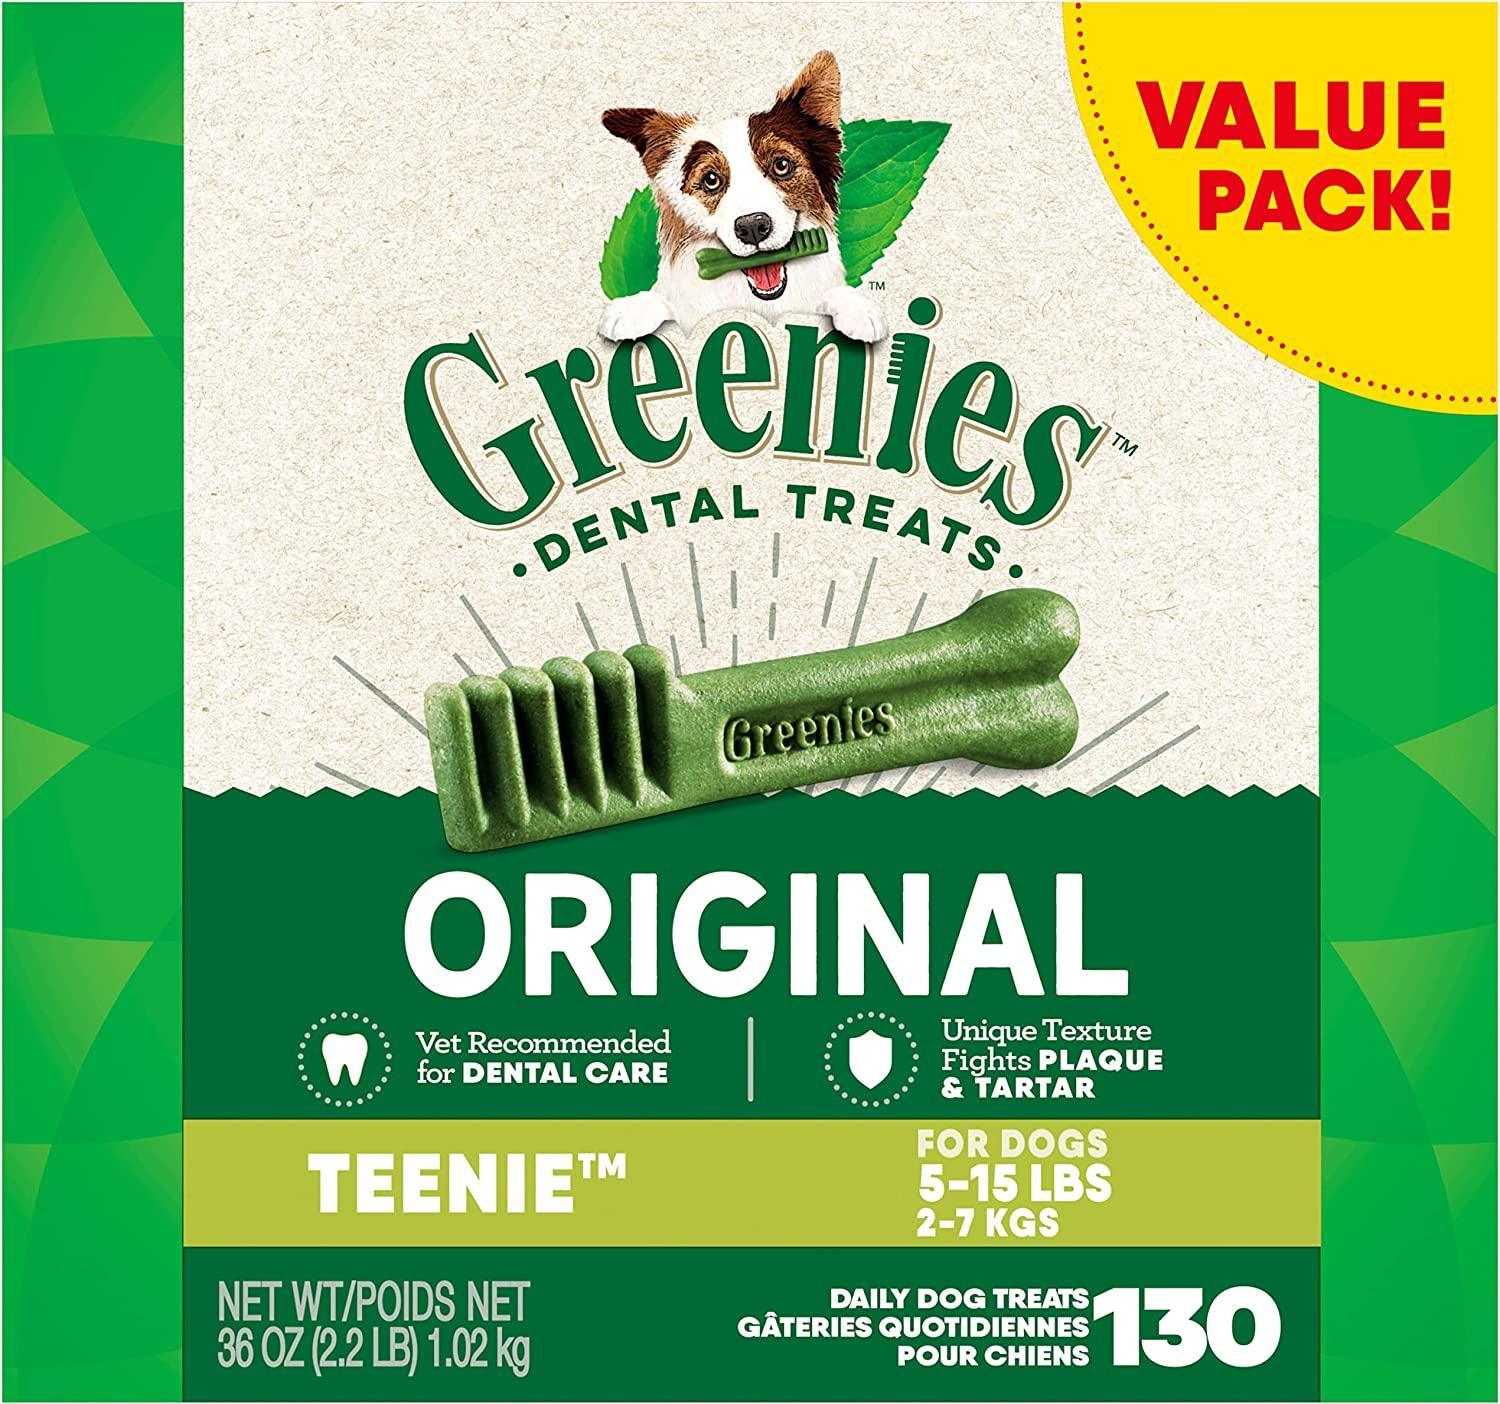 Greenies Original Teenie Dental Dog Treats 130 Pack for $15.53 Shipped